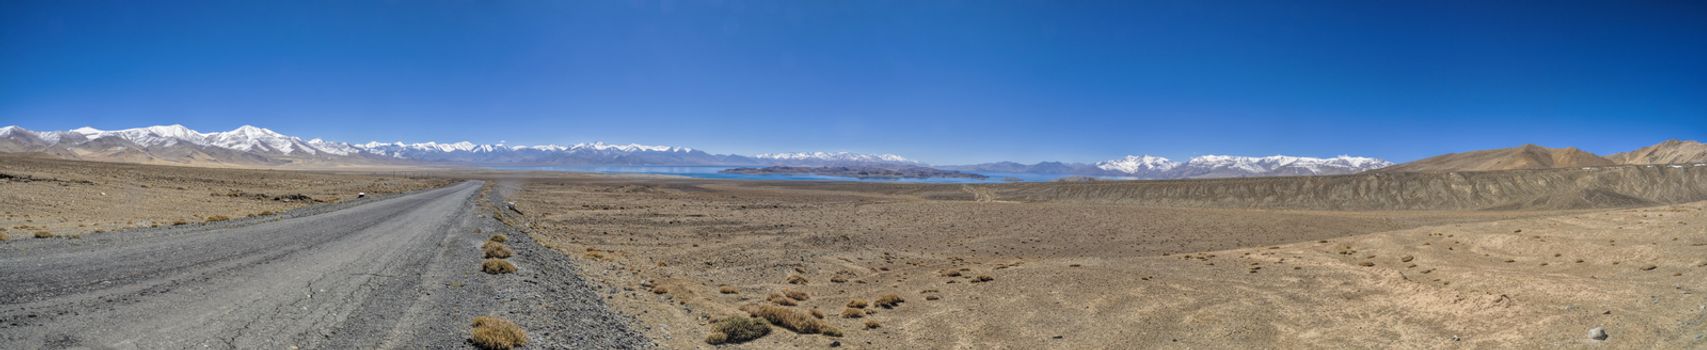 Scenic panorama of road leading through arid landscape in Tajikistan